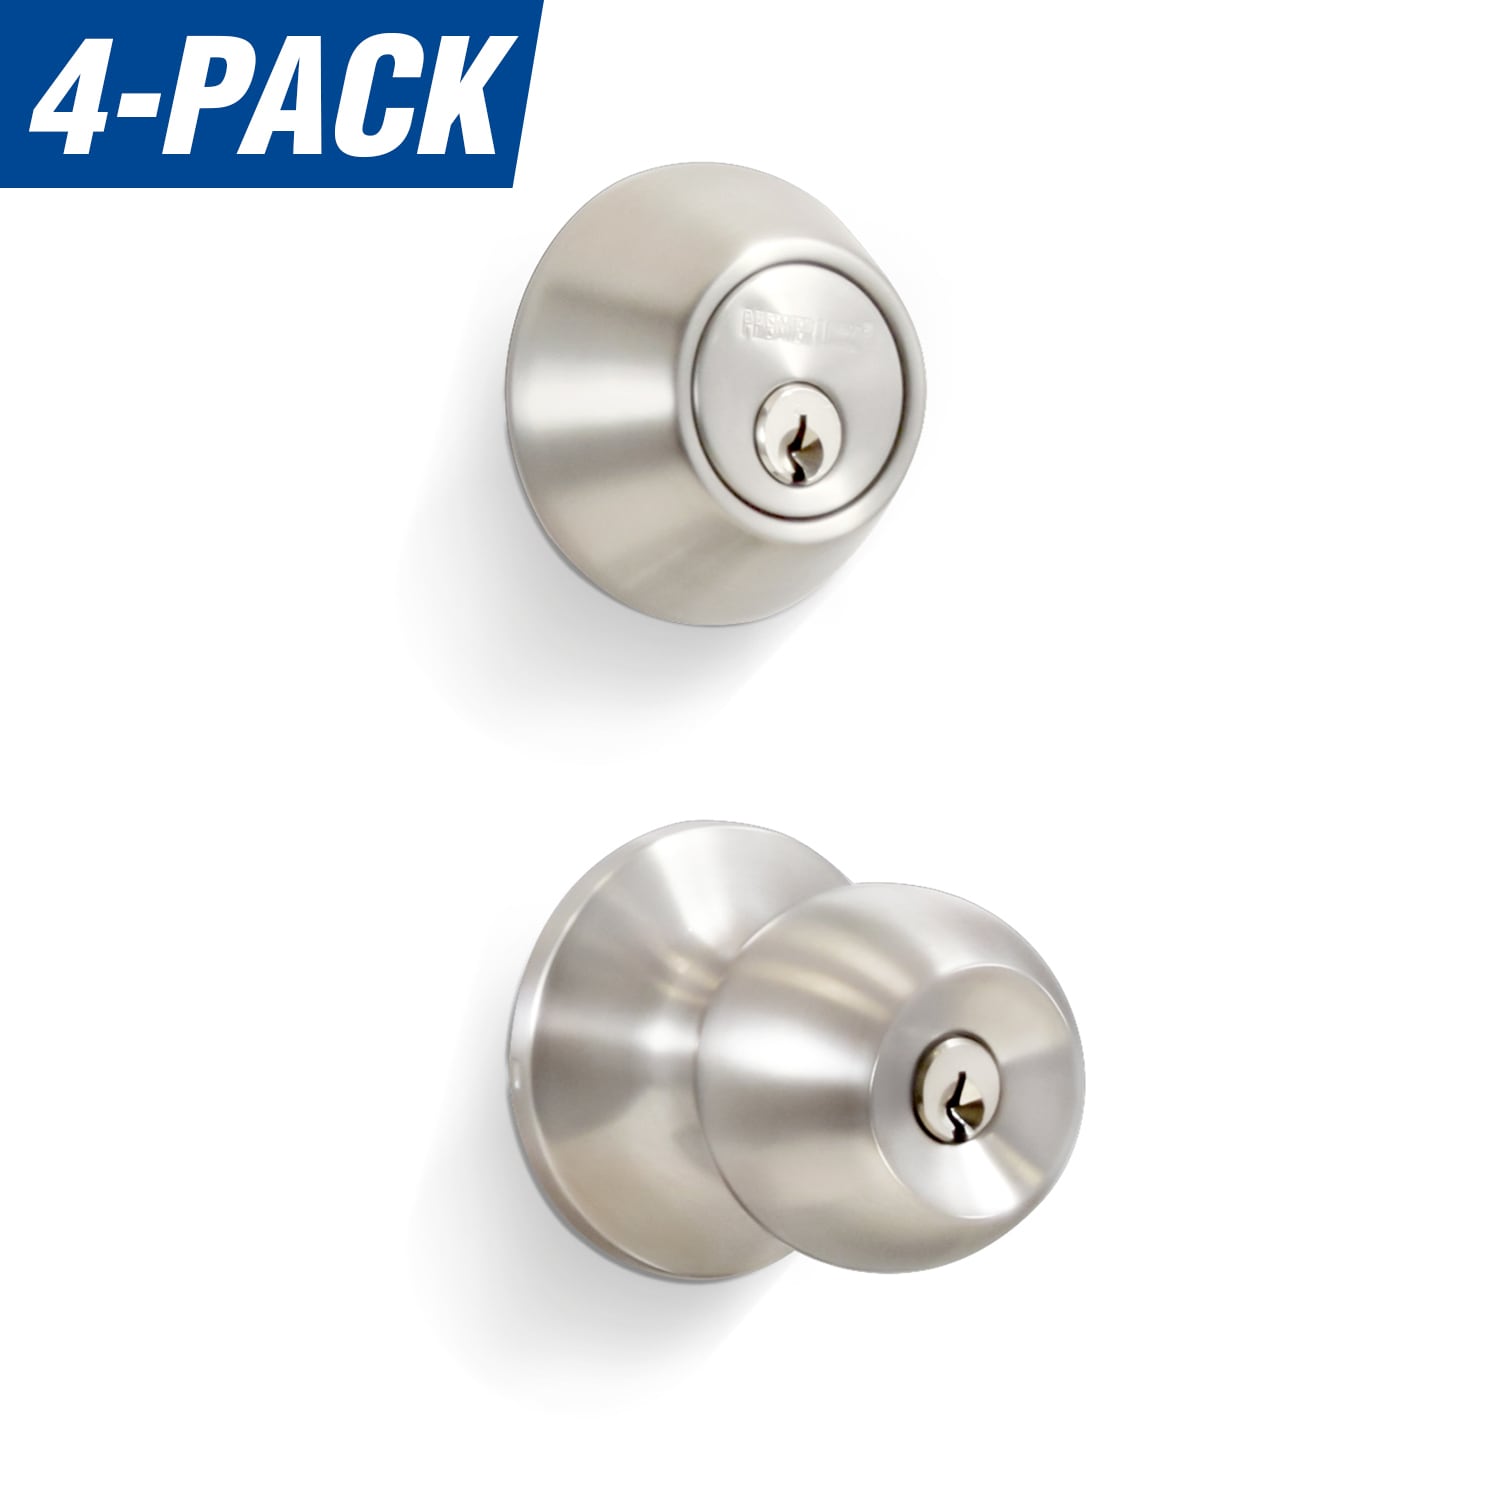 Premier Lock Stainless Steel Entry Door Handle Combo Lock Set with